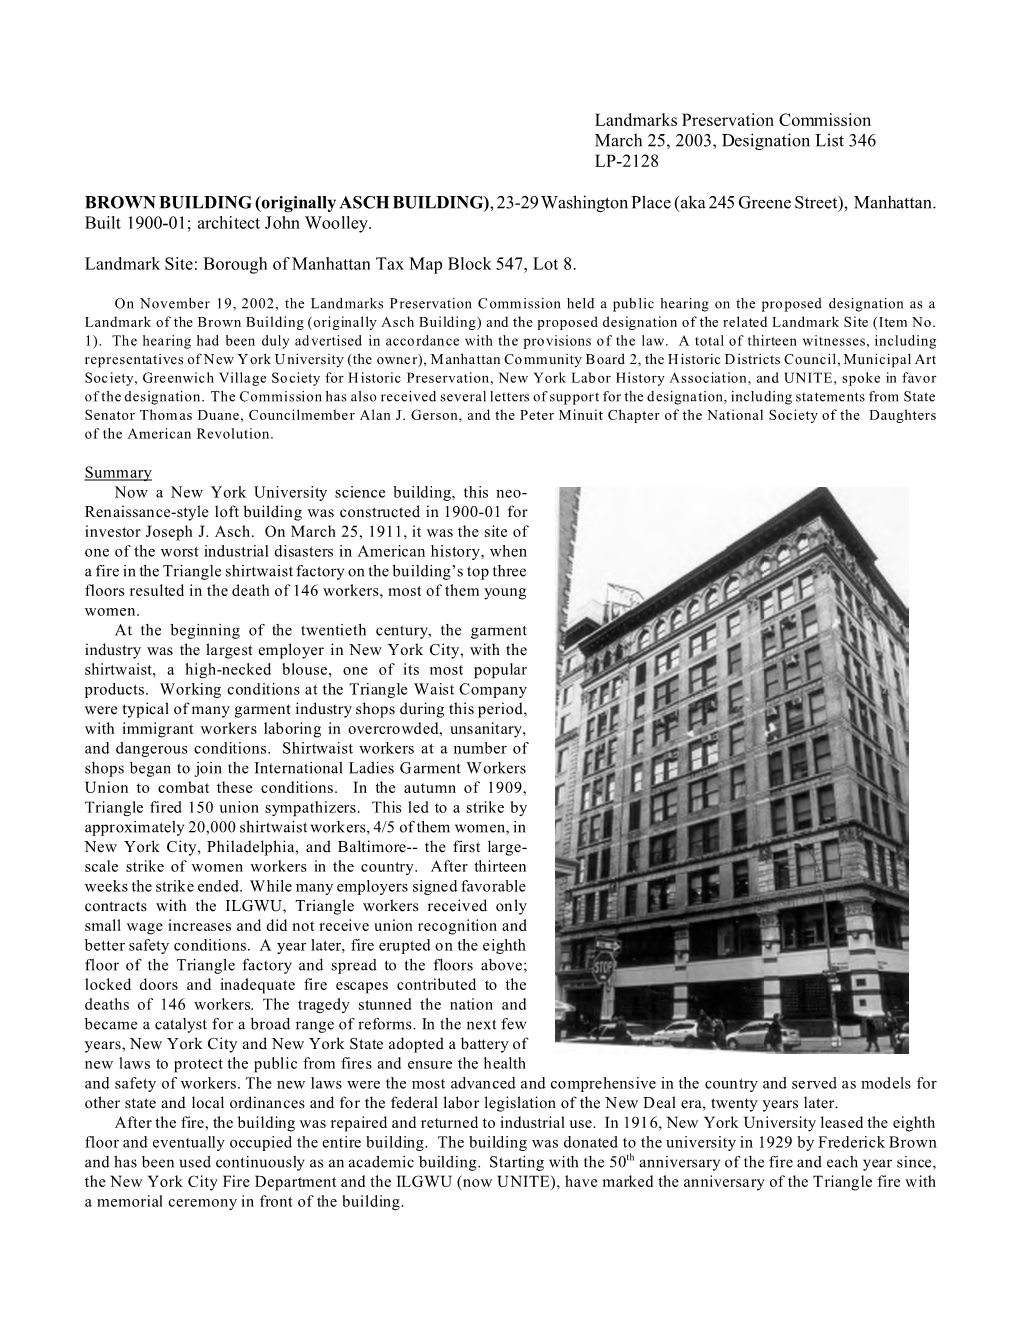 BROWN BUILDING (Originally ASCH BUILDING), 23-29 Washington Place (Aka 245 Greene Street), Manhattan